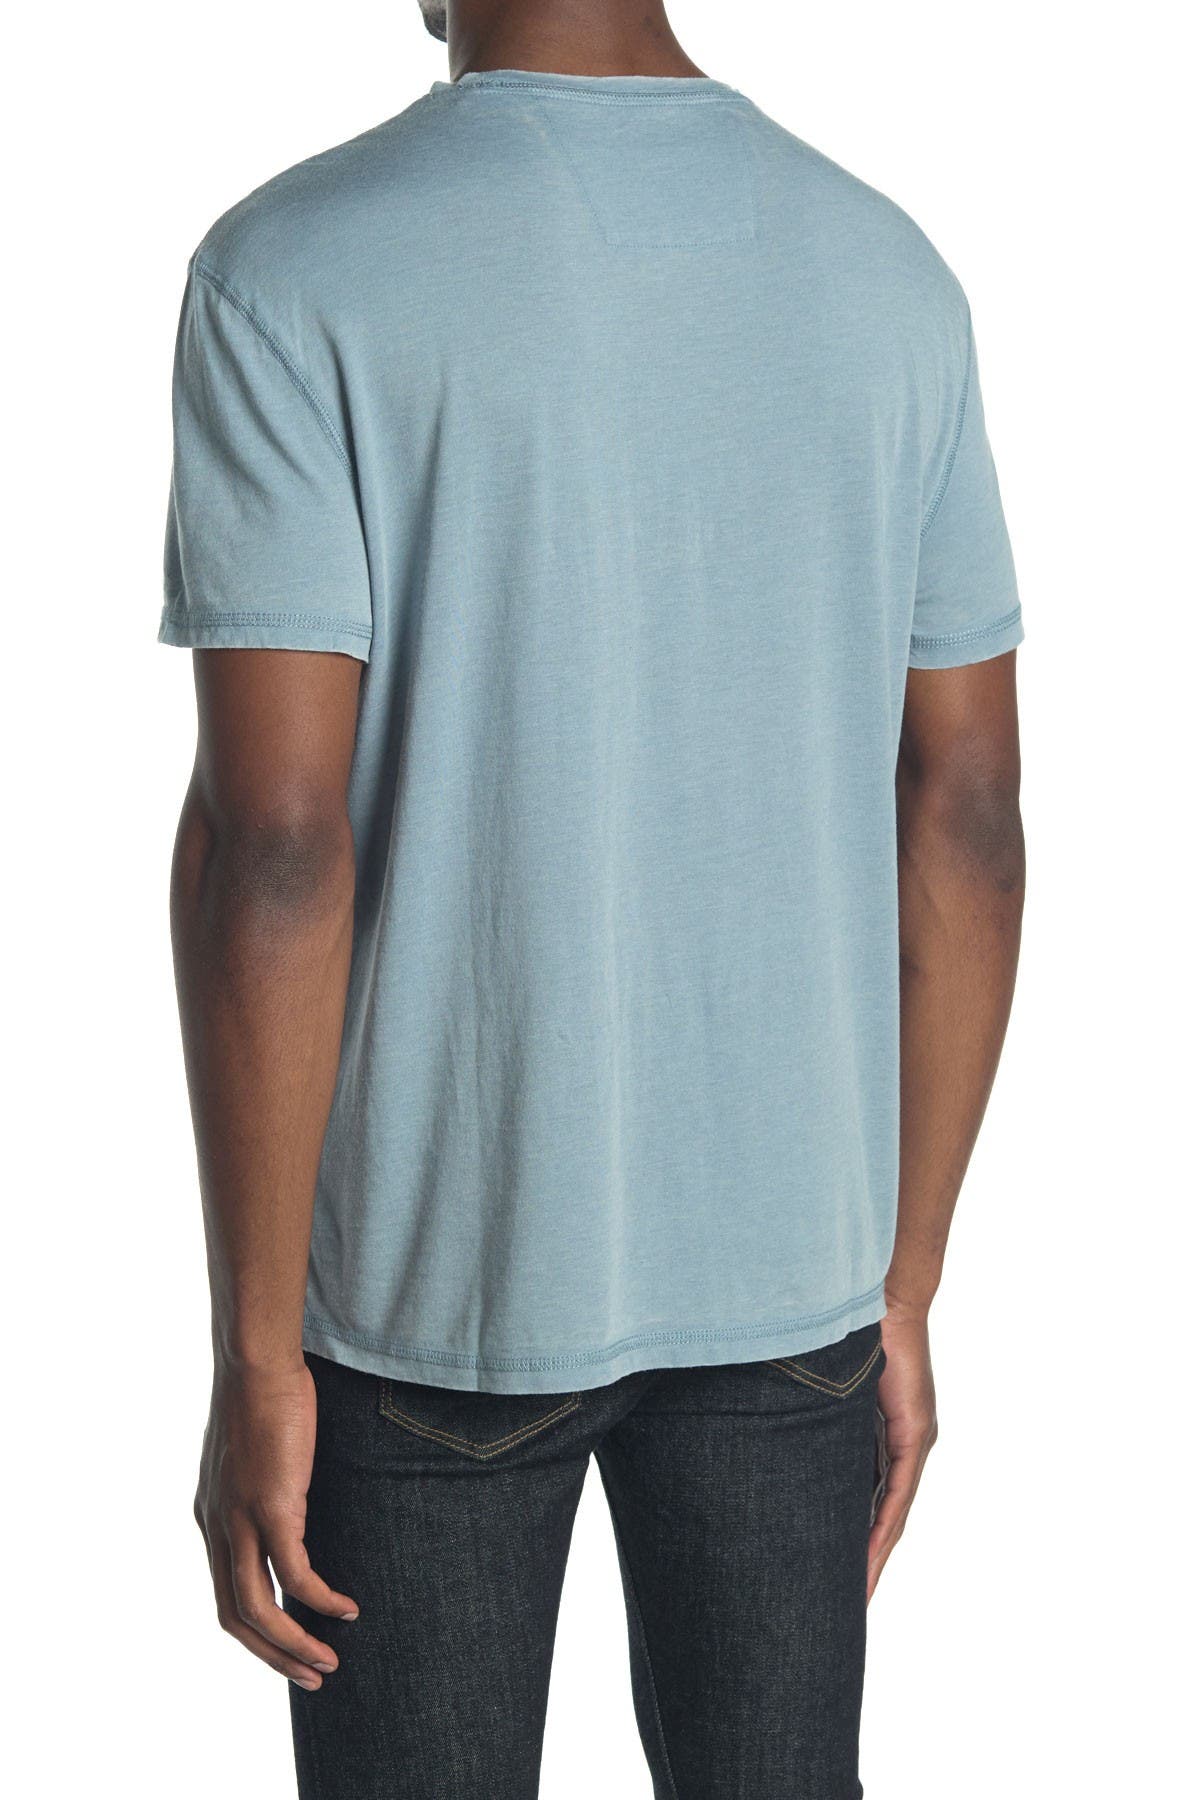 John Varvatos Short Sleeve Crew Neck T-shirt In Light/pastel Blue7